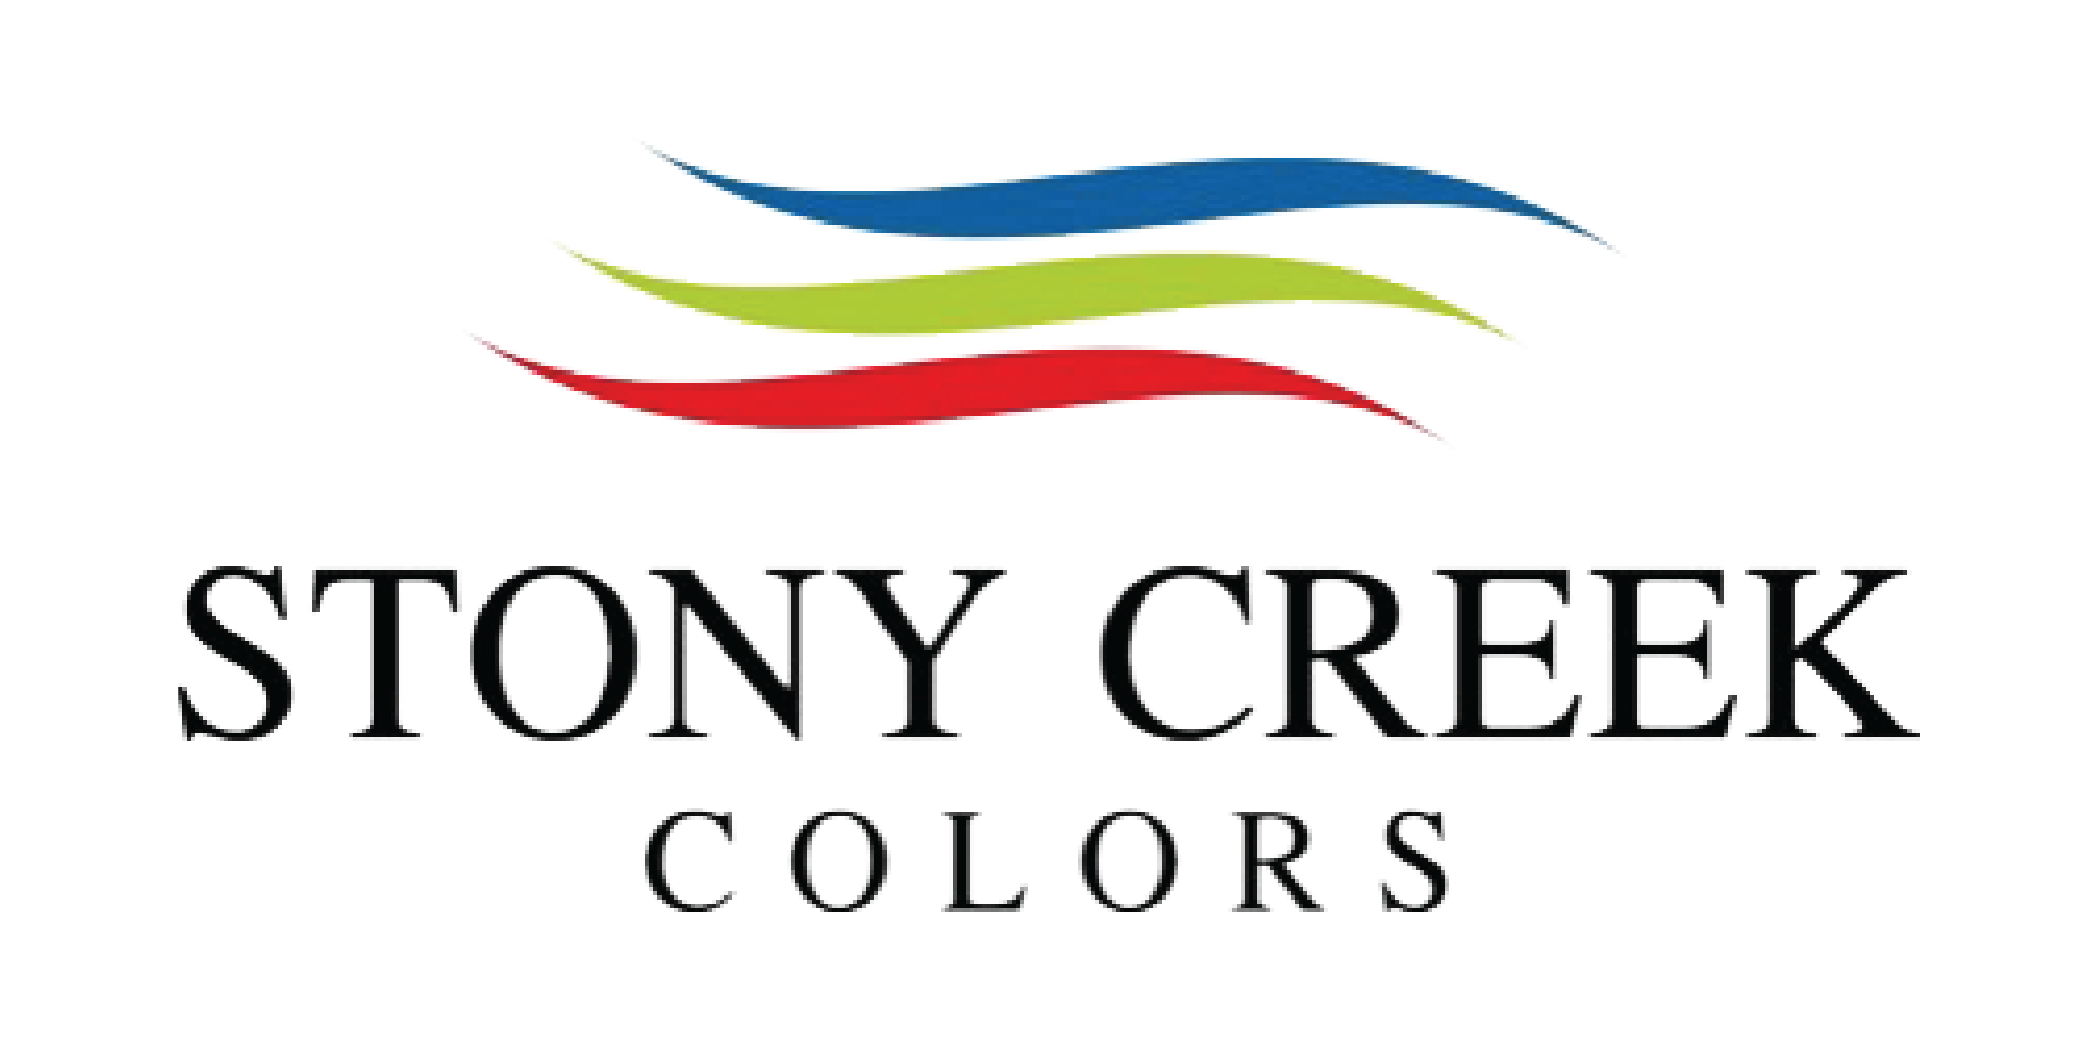 https://conedenim.com/wp-content/uploads/2020/11/Stony-Creek-Colors-01.png